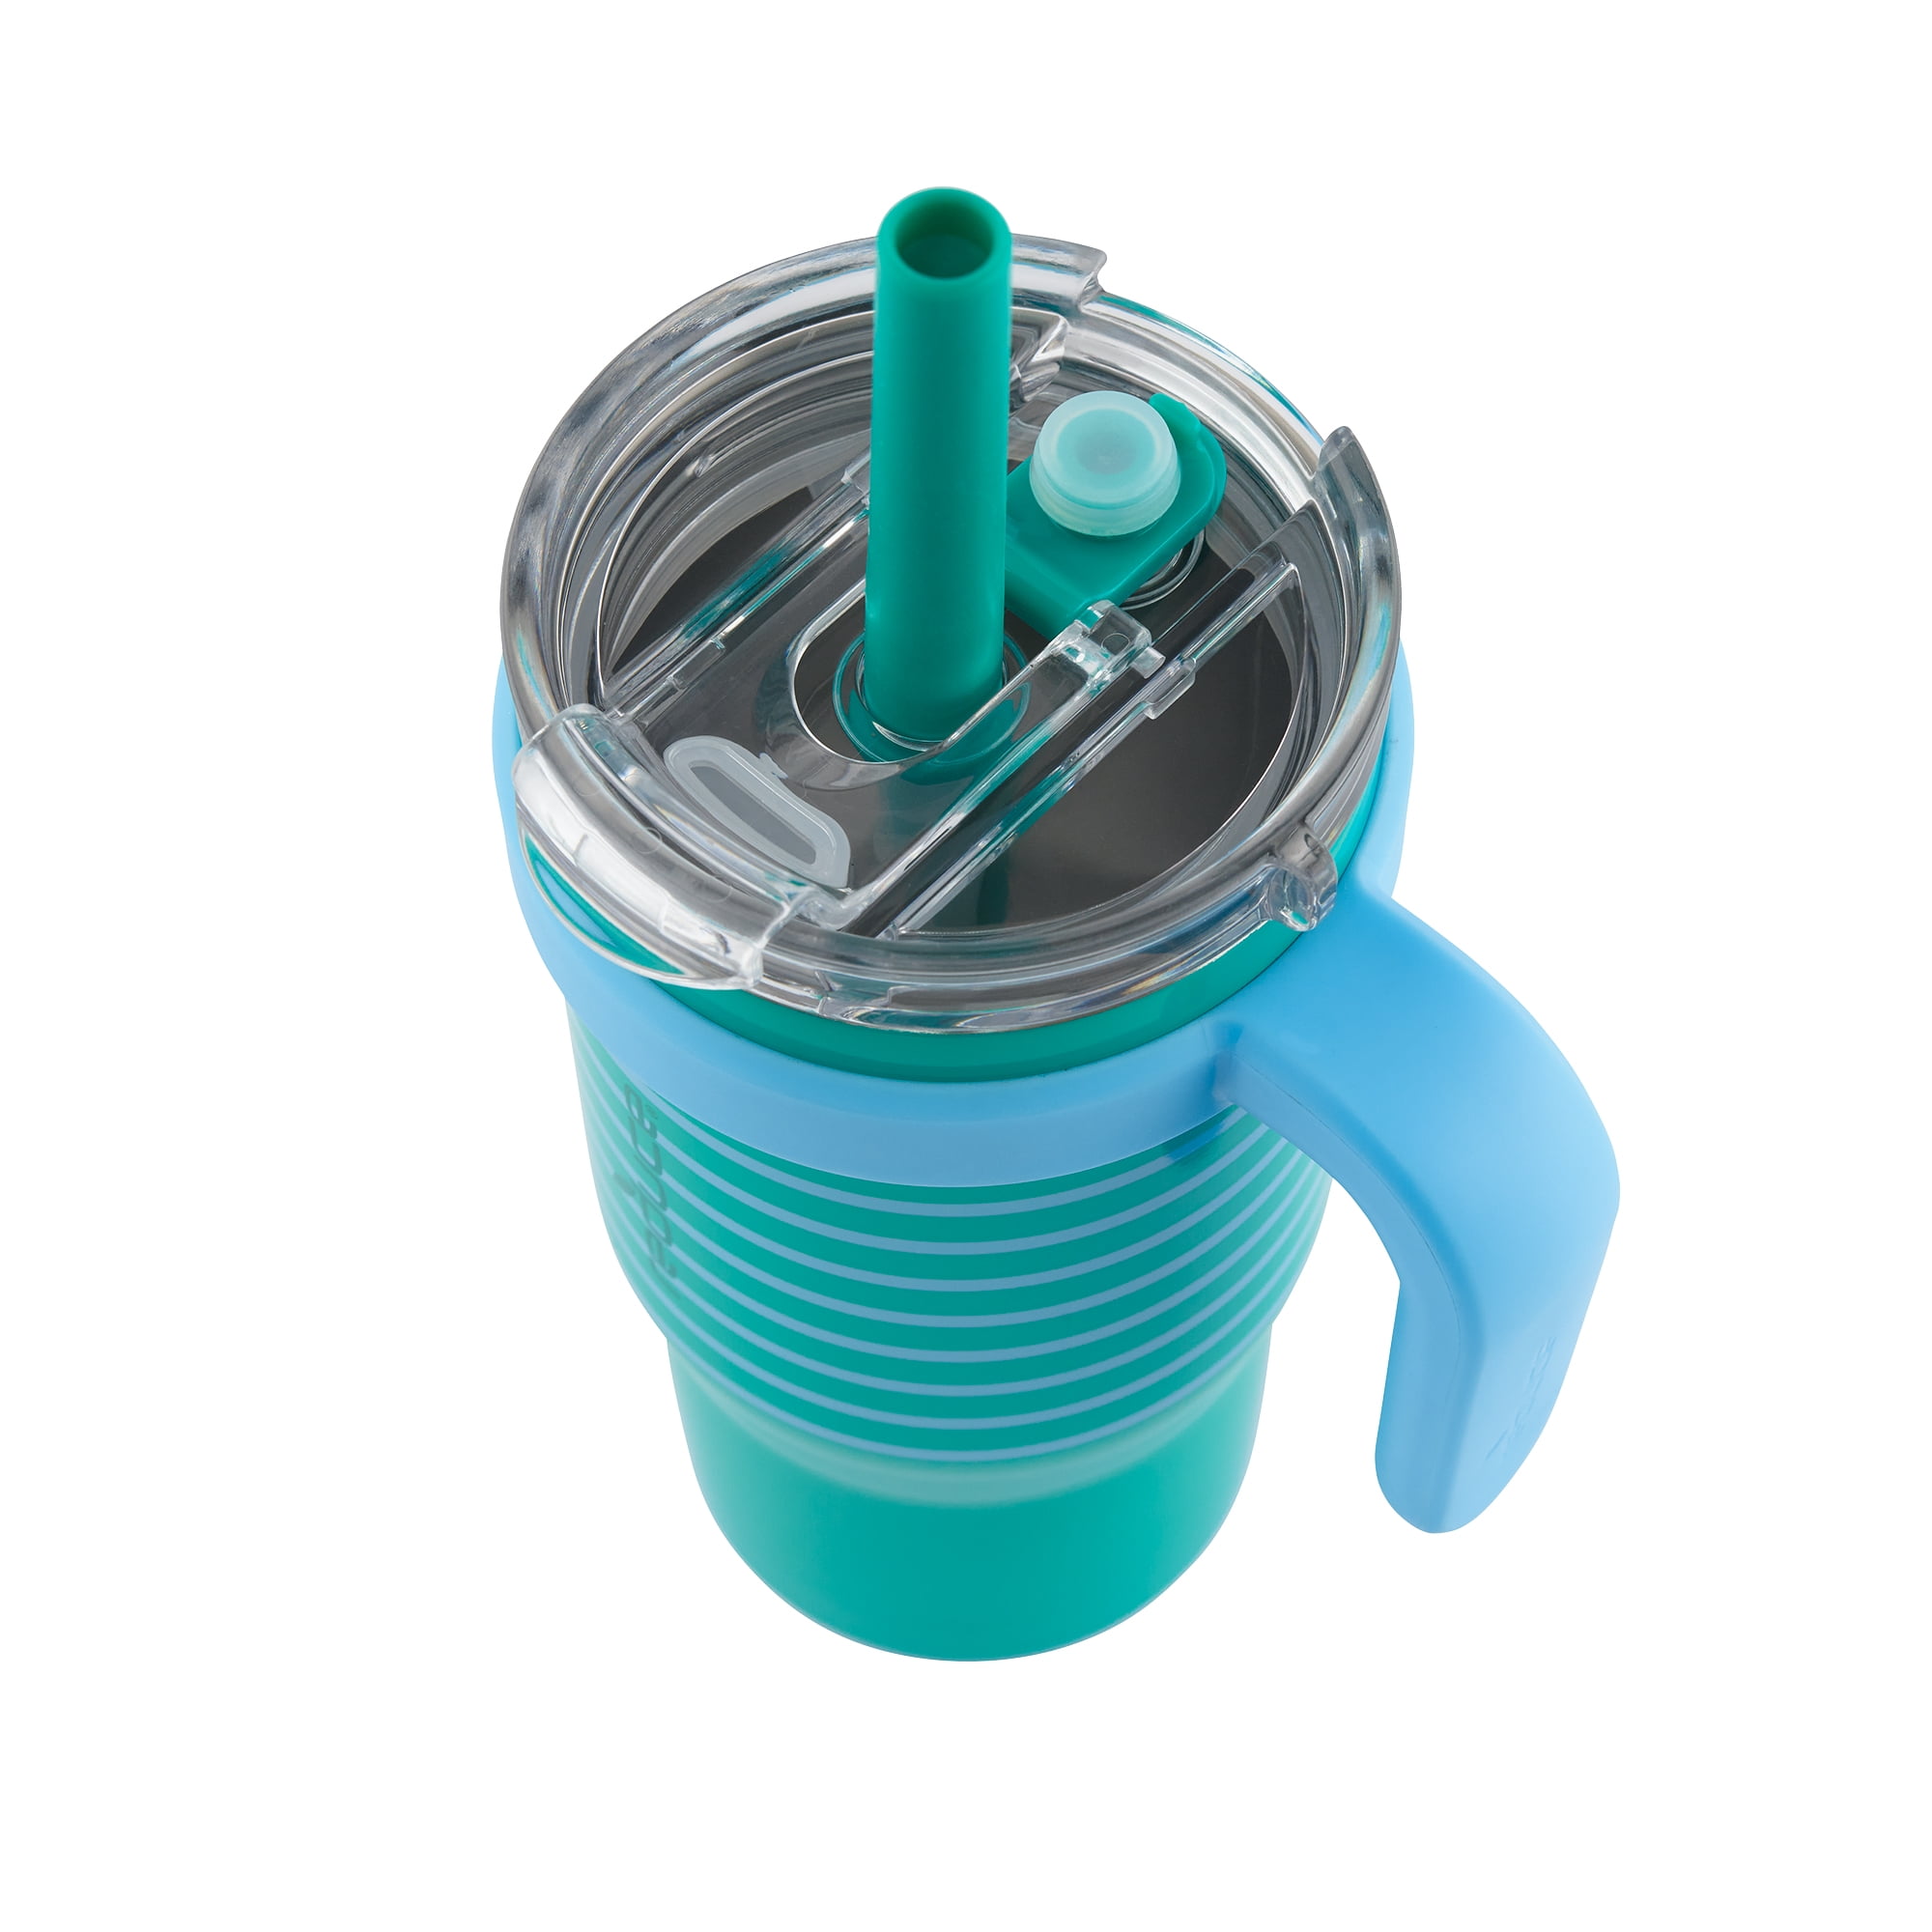 Reduce 14 oz Insulated Coffee Mug with Handle and Flo-Motion Lid - Perfect  Travel Mug with Handle fo…See more Reduce 14 oz Insulated Coffee Mug with